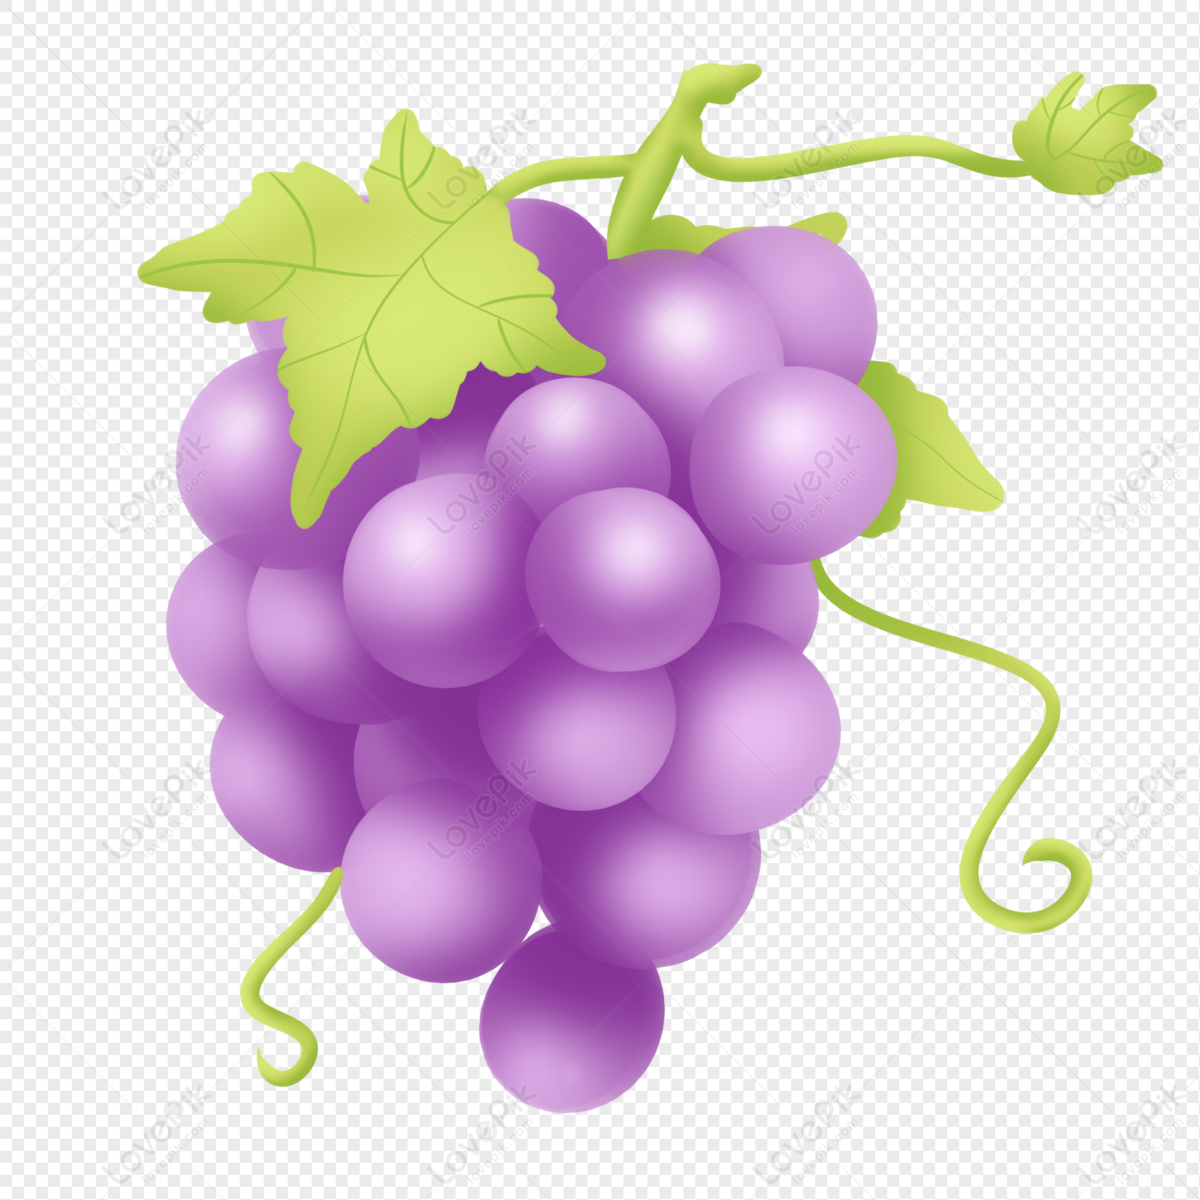 free-purple-grapes-cliparts-download-free-purple-grapes-cliparts